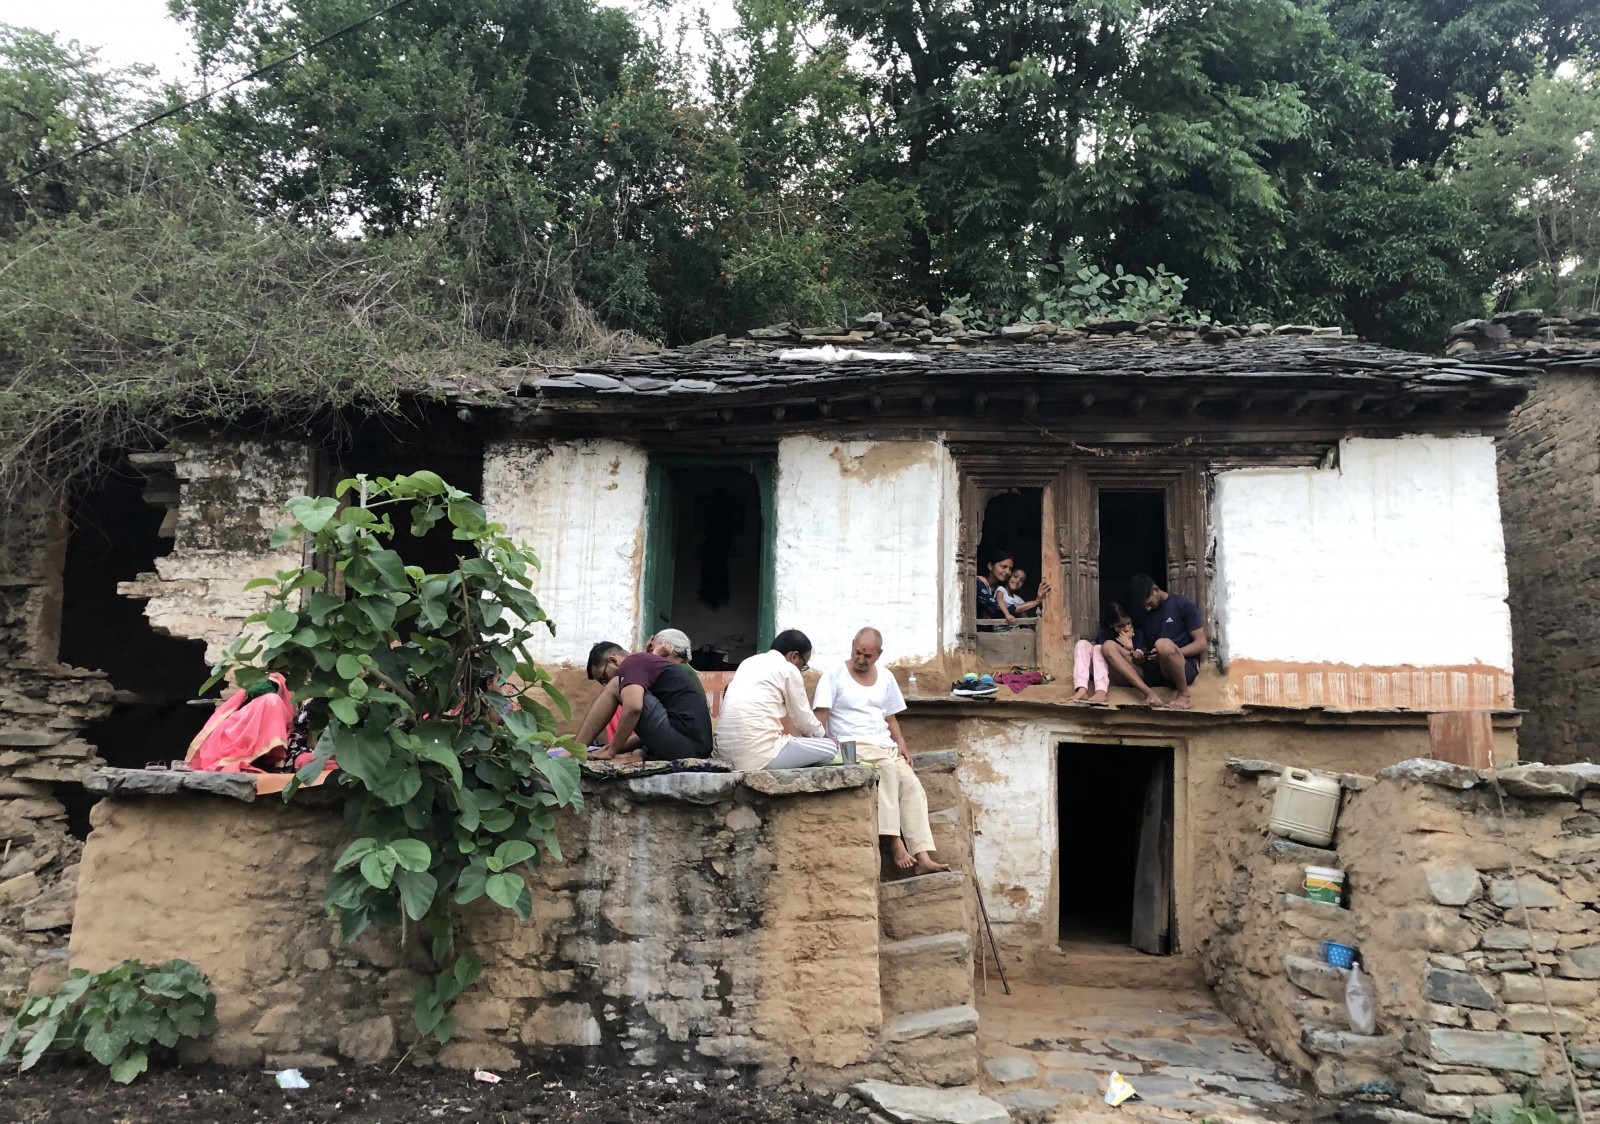 Ranikhet Range village, Almora